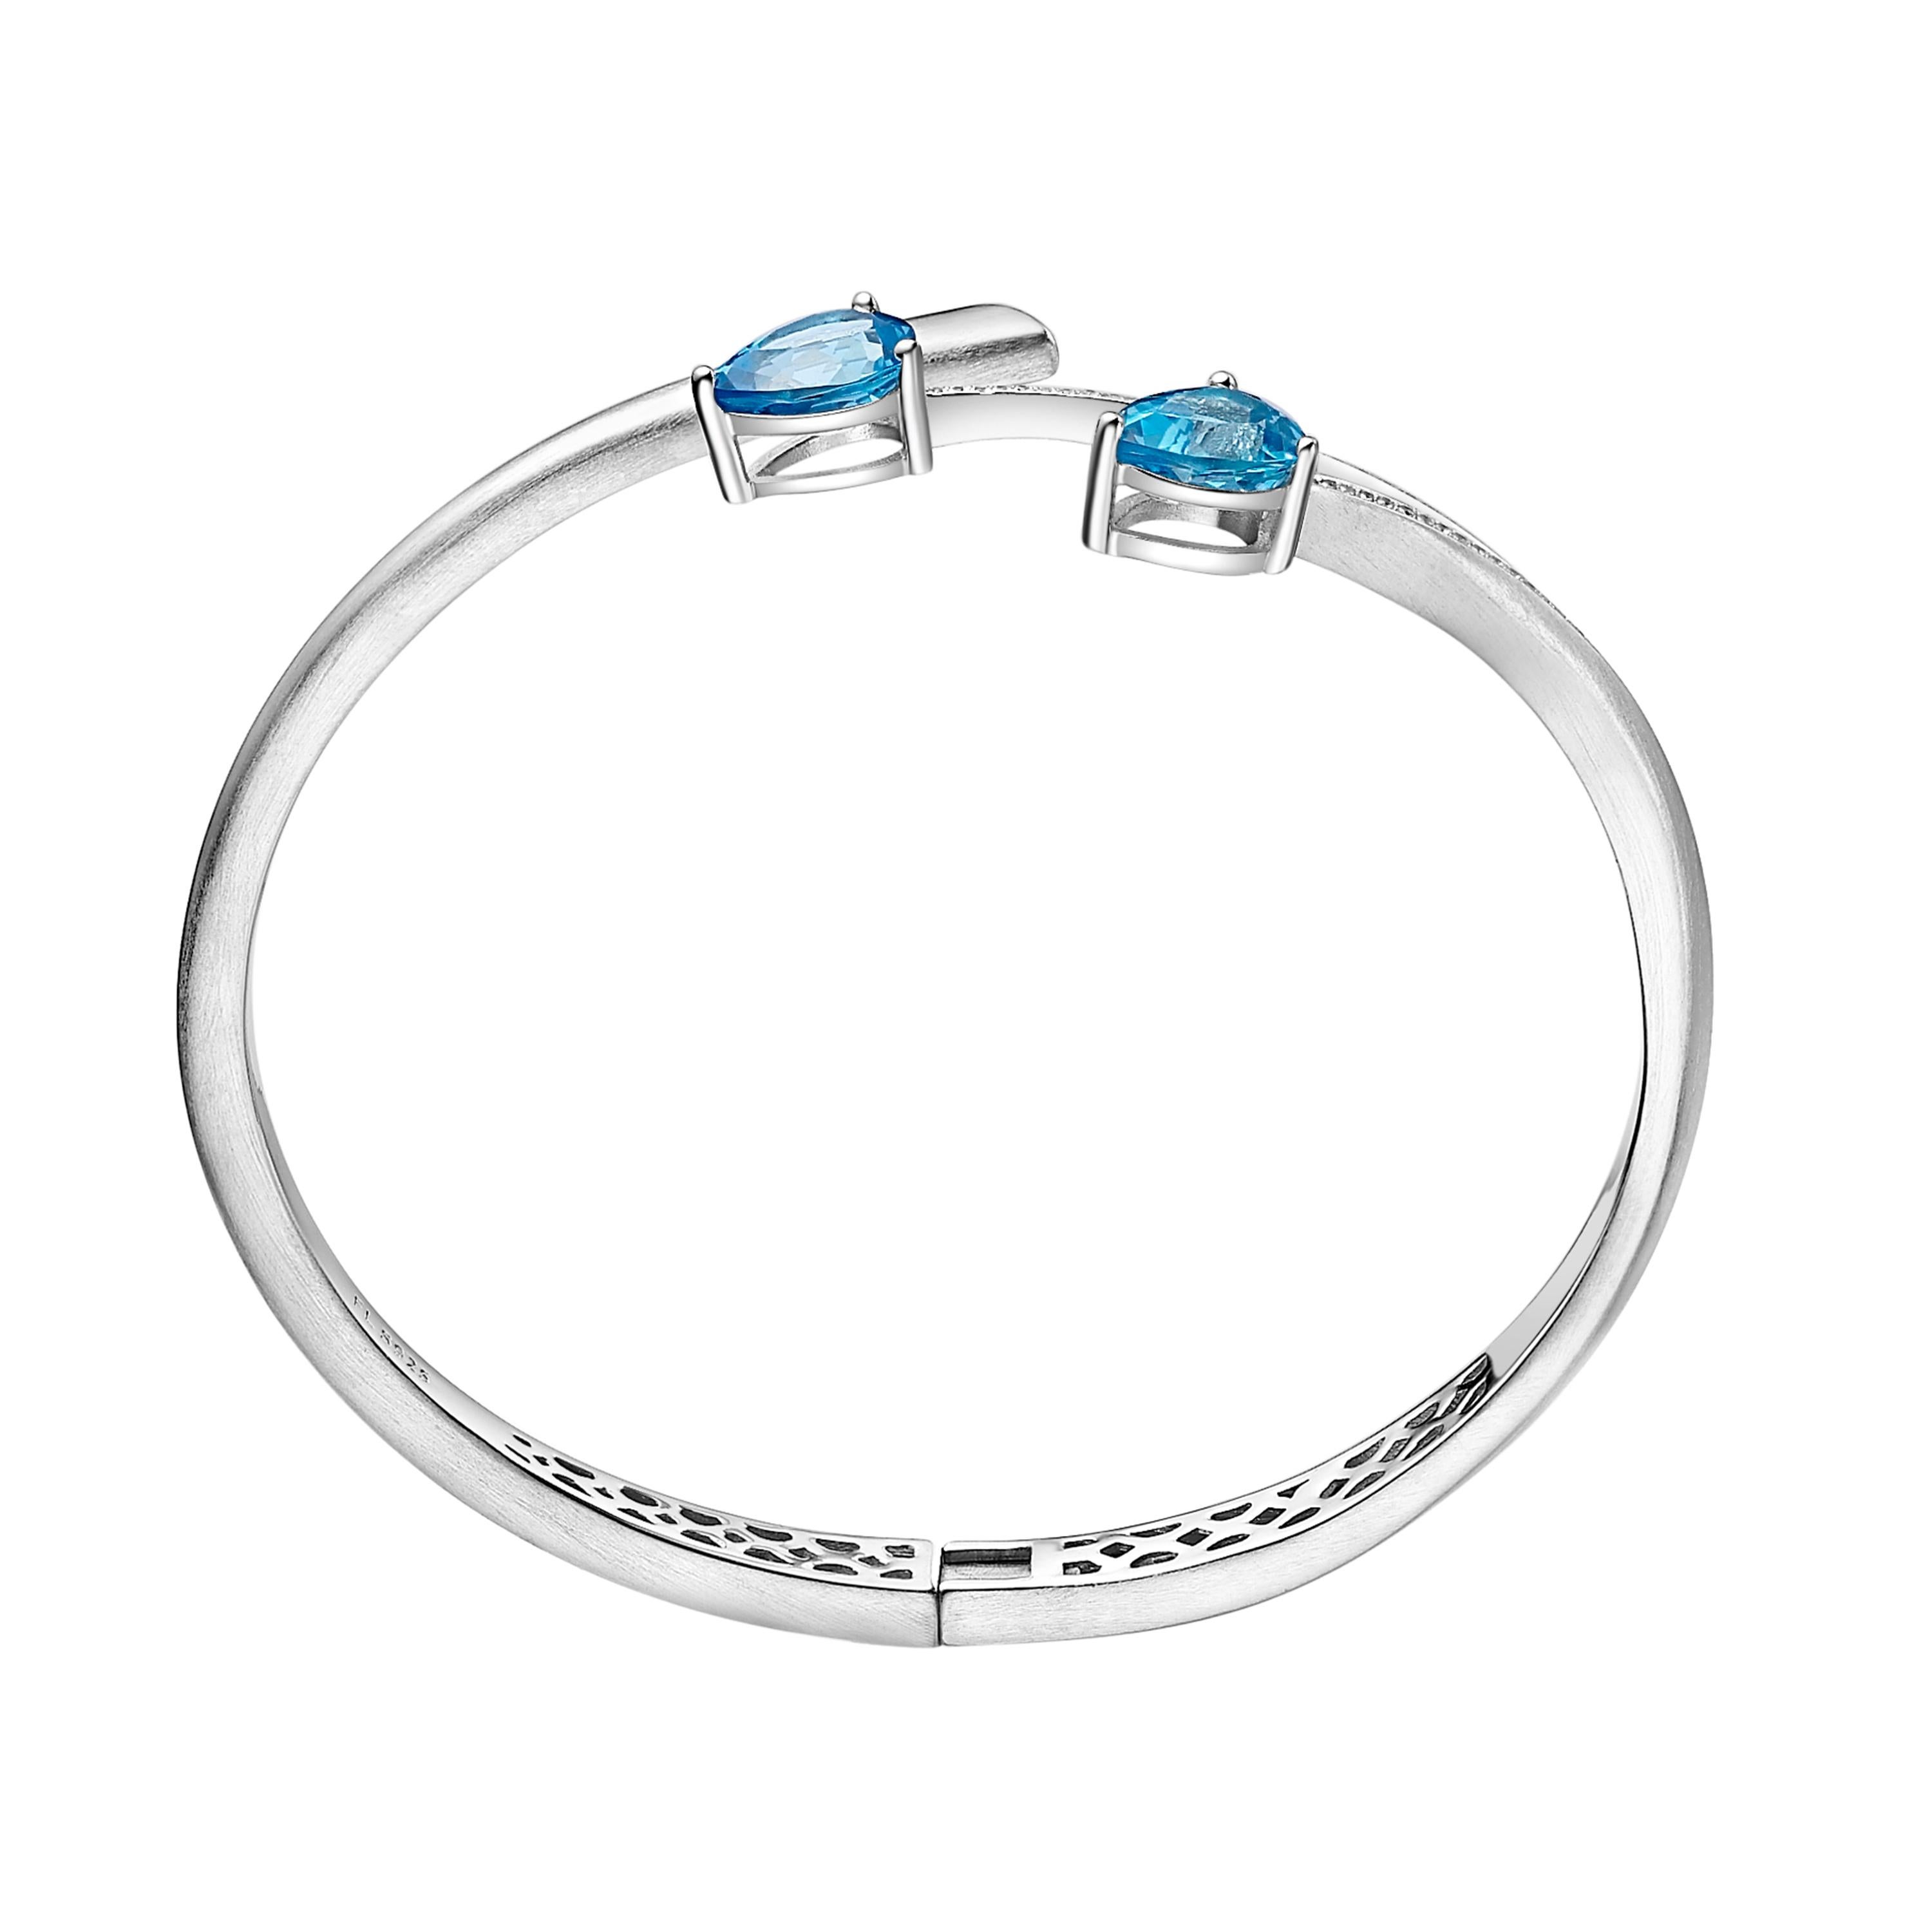 Contemporary Fei Liu Blue Topaz Cubic Zirconia Sterling Silver Bangle Bracelet